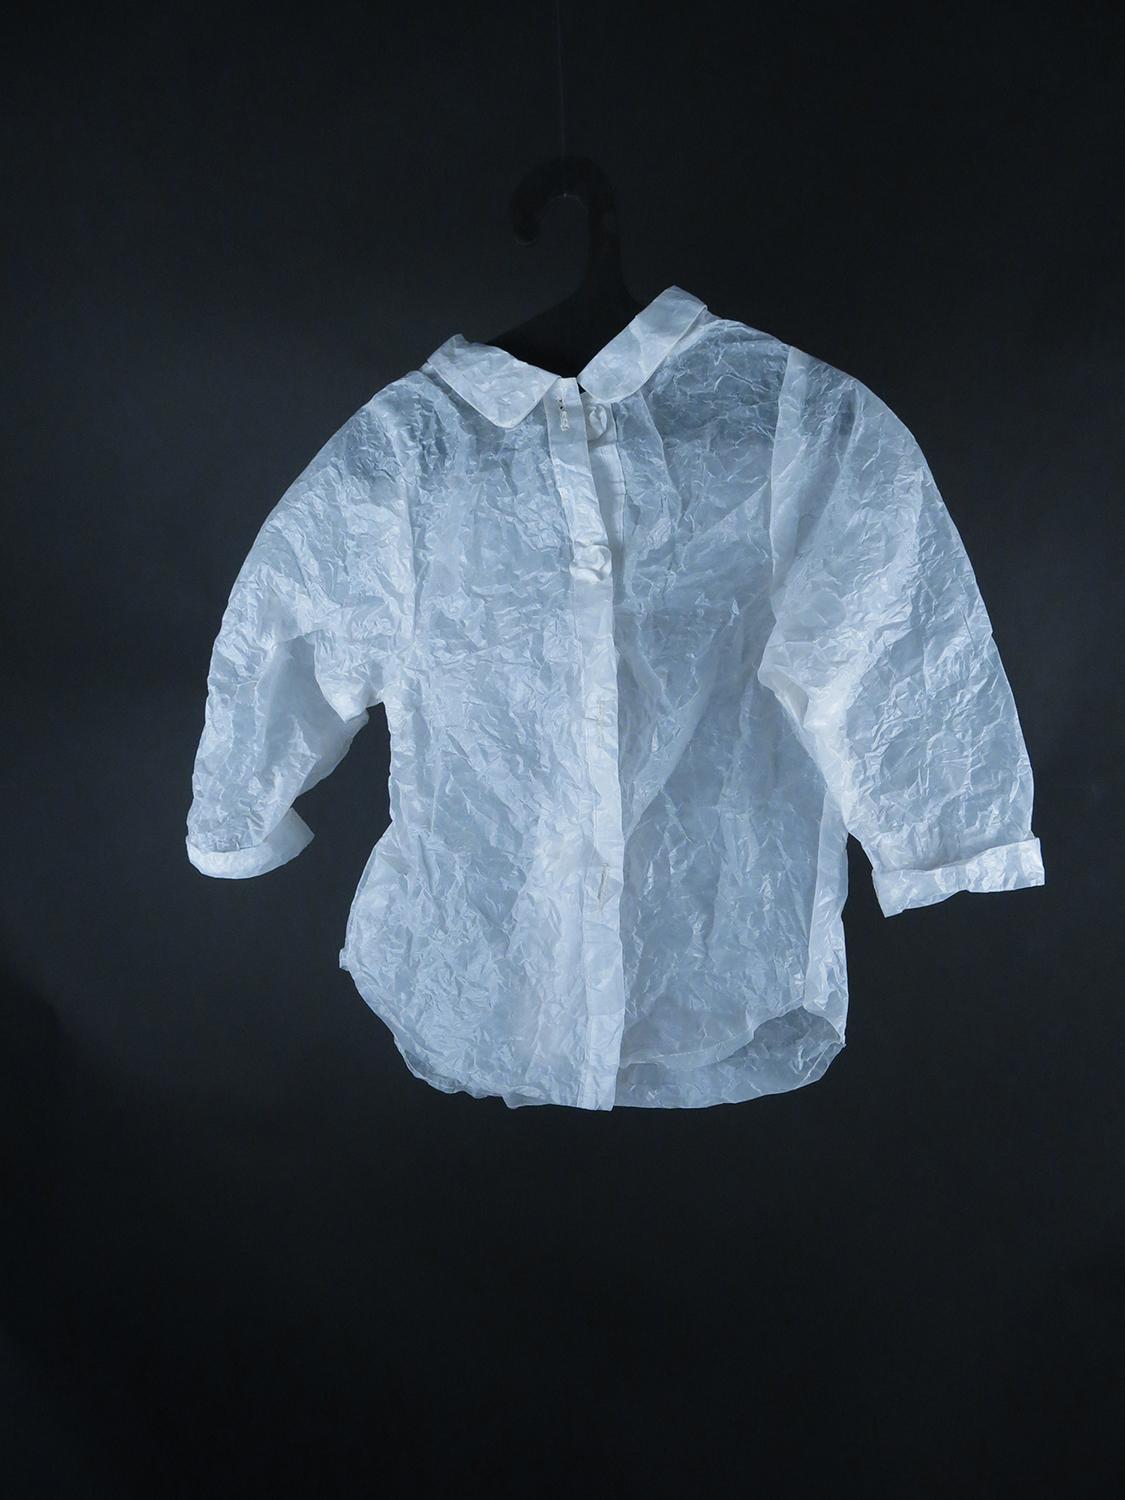 Child's Shirt (Figurative White Glassine Paper Sculpture of Clothing Garment)